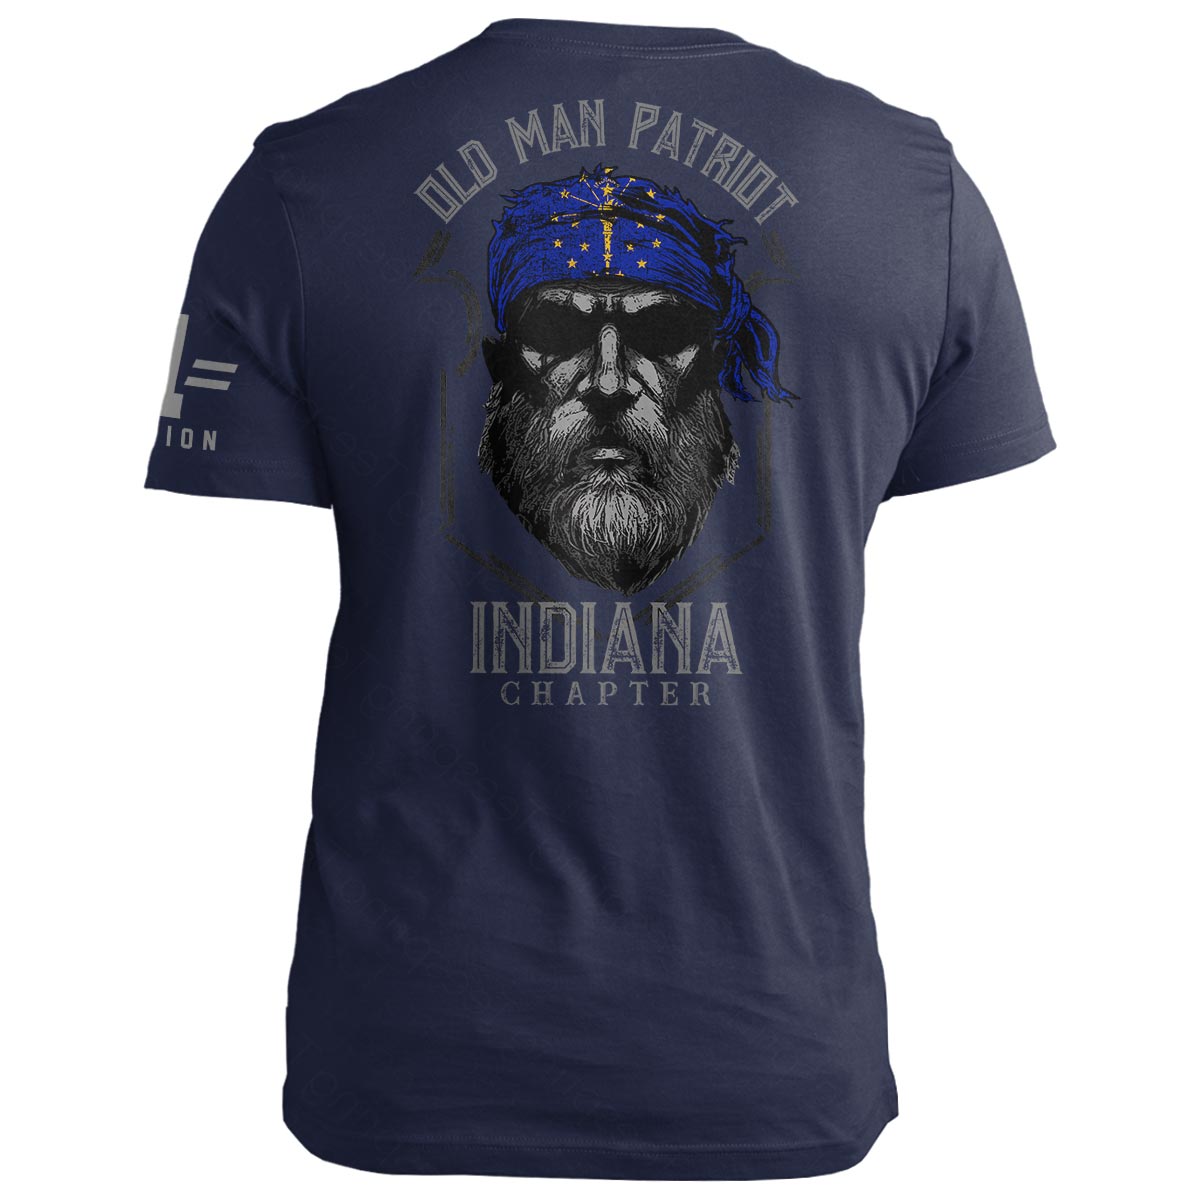 Indiana Old Man Patriot